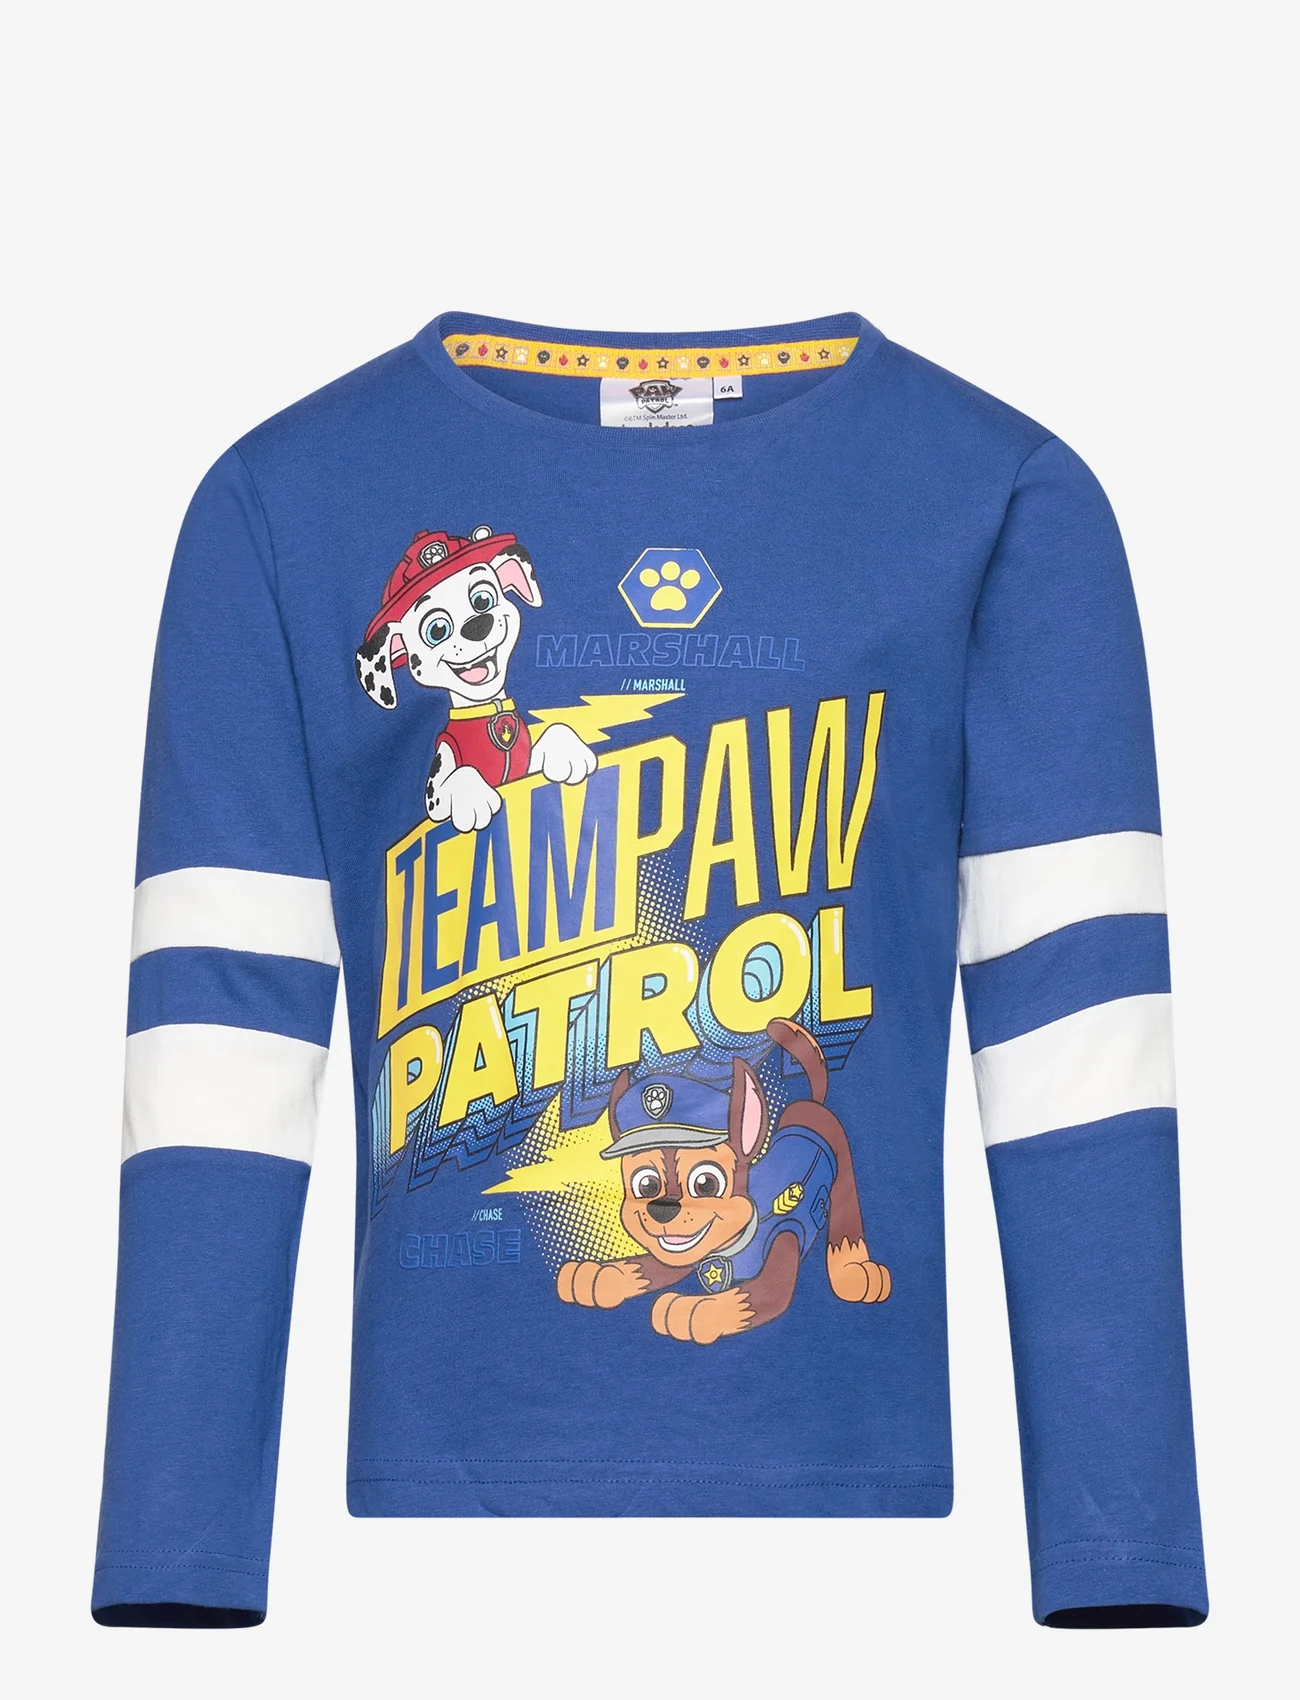 Paw Patrol - LONG-SLEEVED T-SHIRT - long-sleeved t-shirts - blue - 0